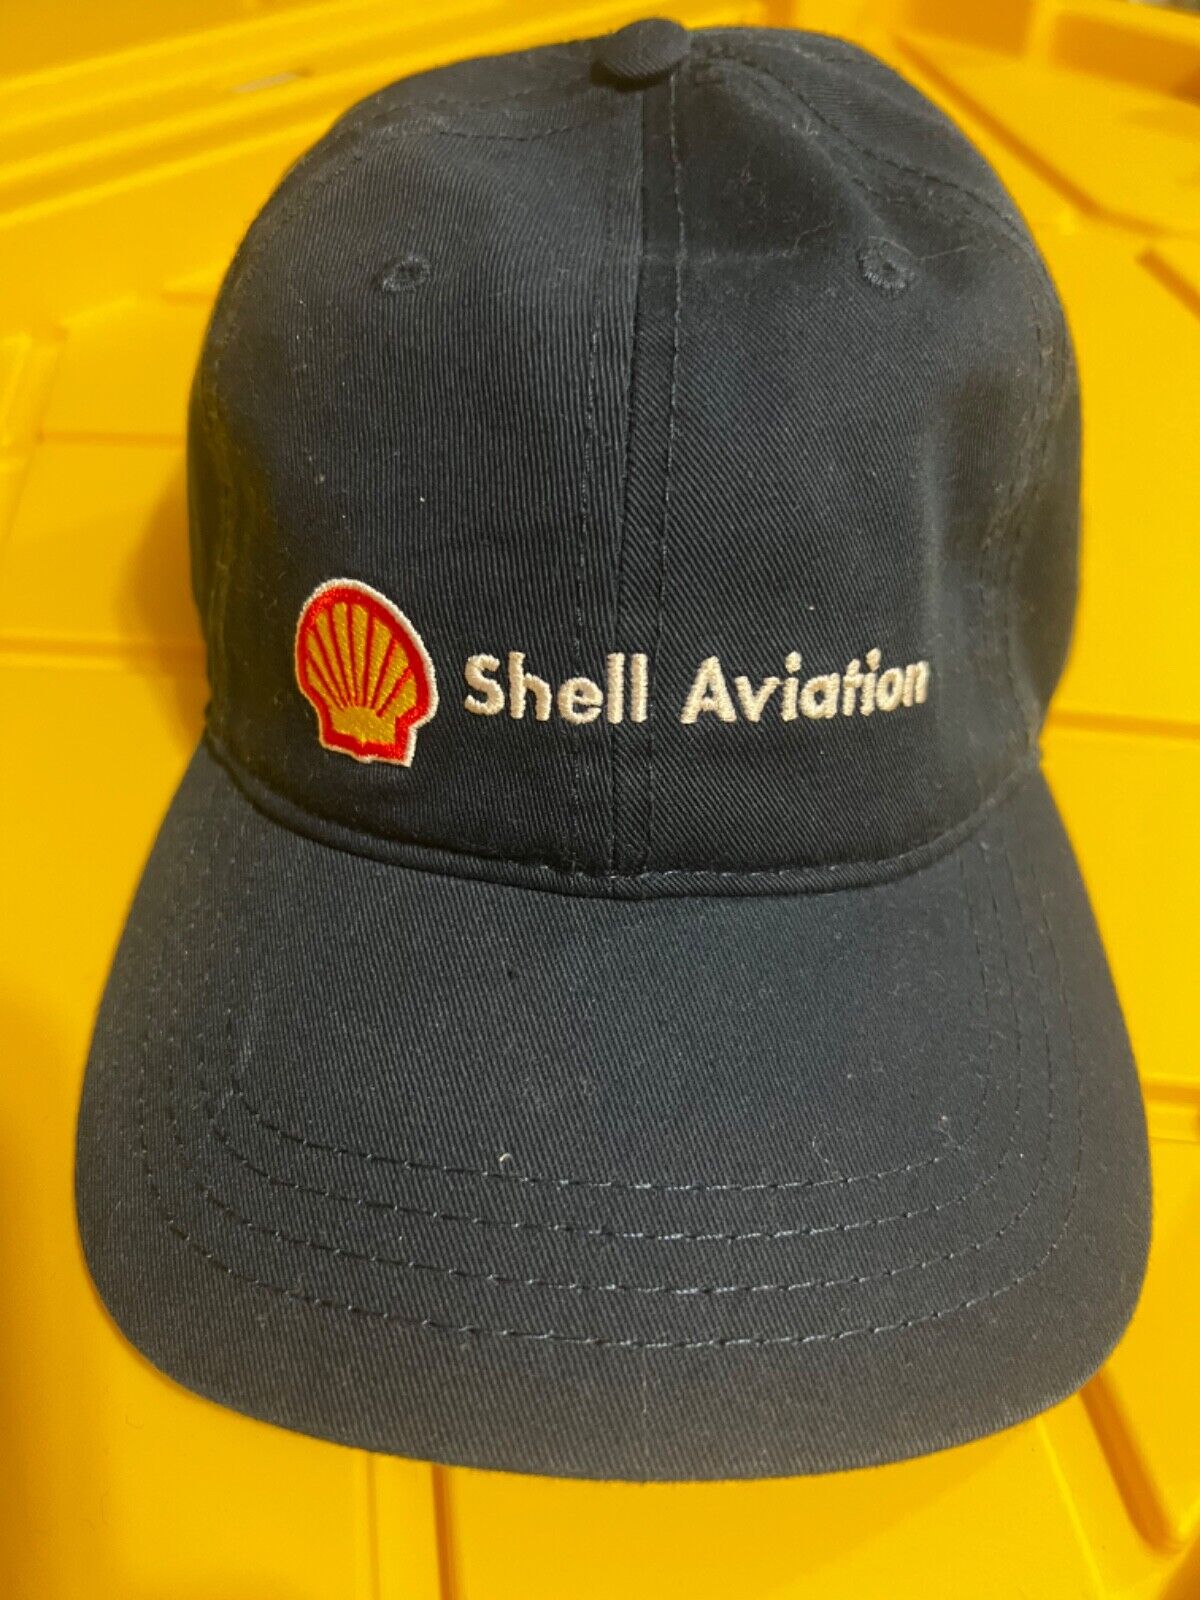 SHELL AVIATION  Hat cap Brand New AIRCRAFT FUEL oil gas Oshkosh 2018 air show